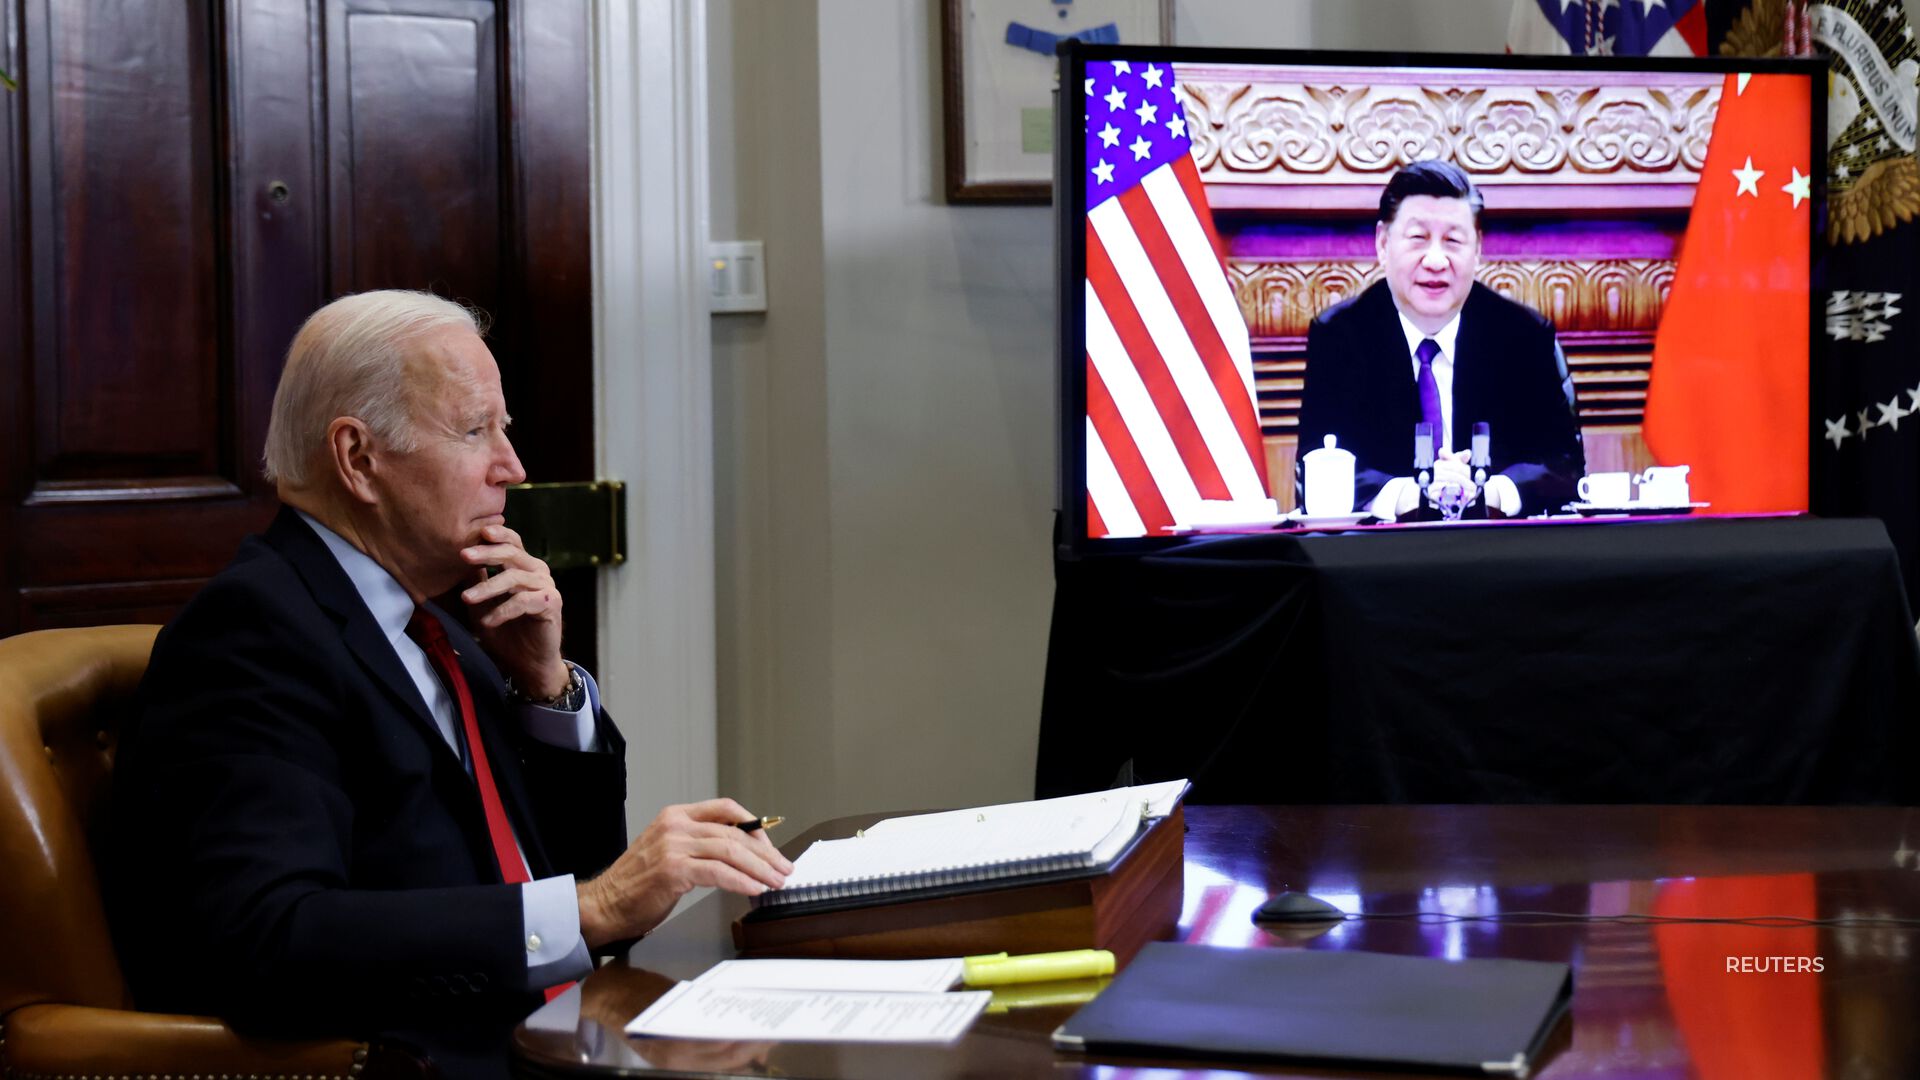 President Biden held a meeting with Xi Jinping